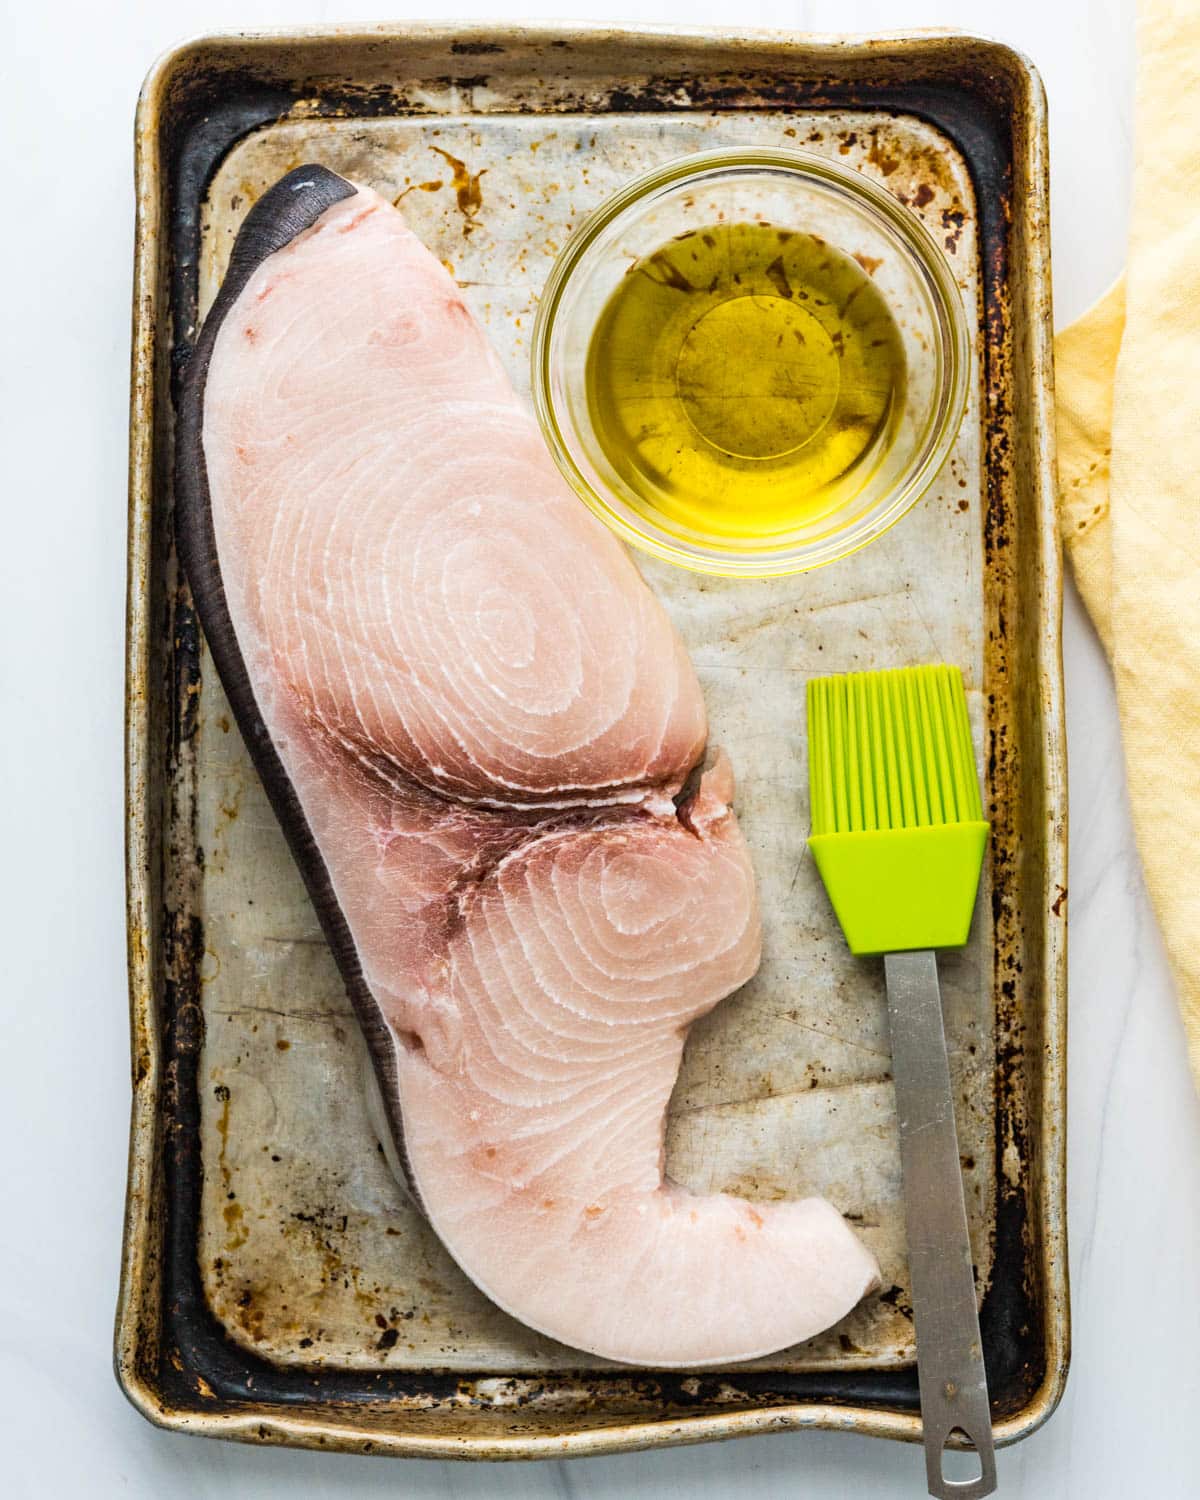 A large swordfish steak on a platter with olive oil.